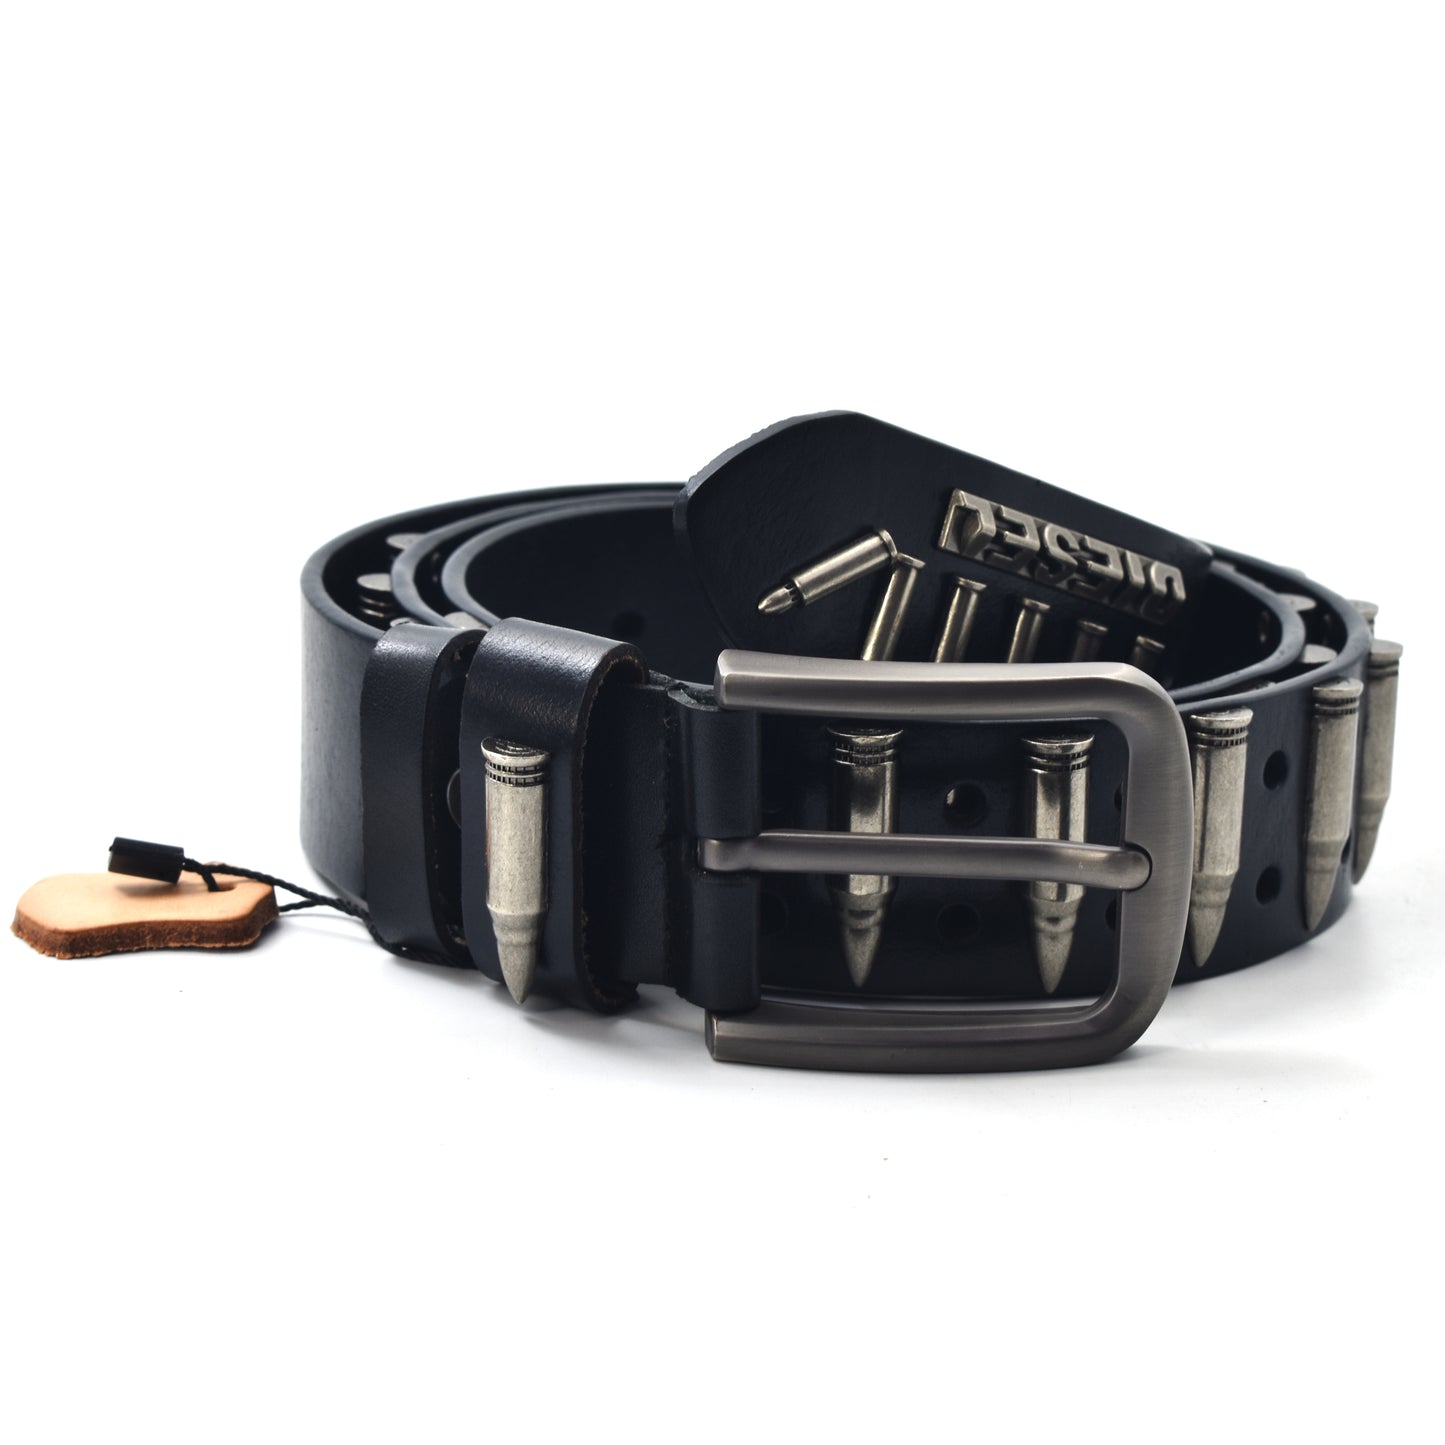 Premium Quality Manual Buckle Belt | DSL Belt 1002